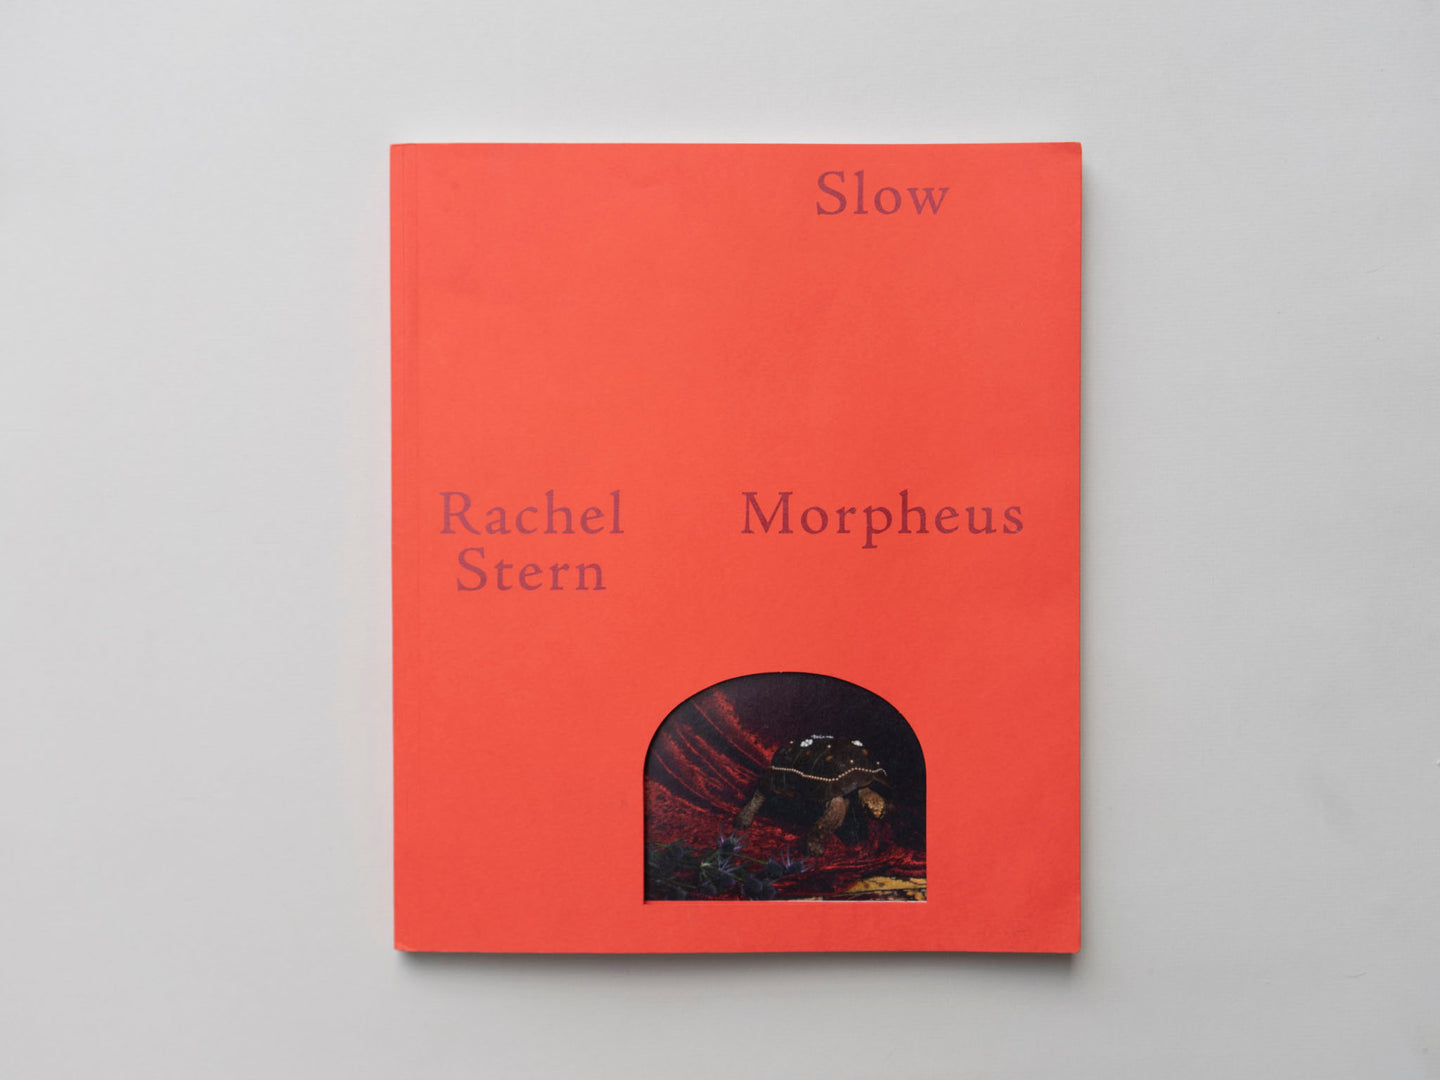 Slow Morpheus by Rachel Stern